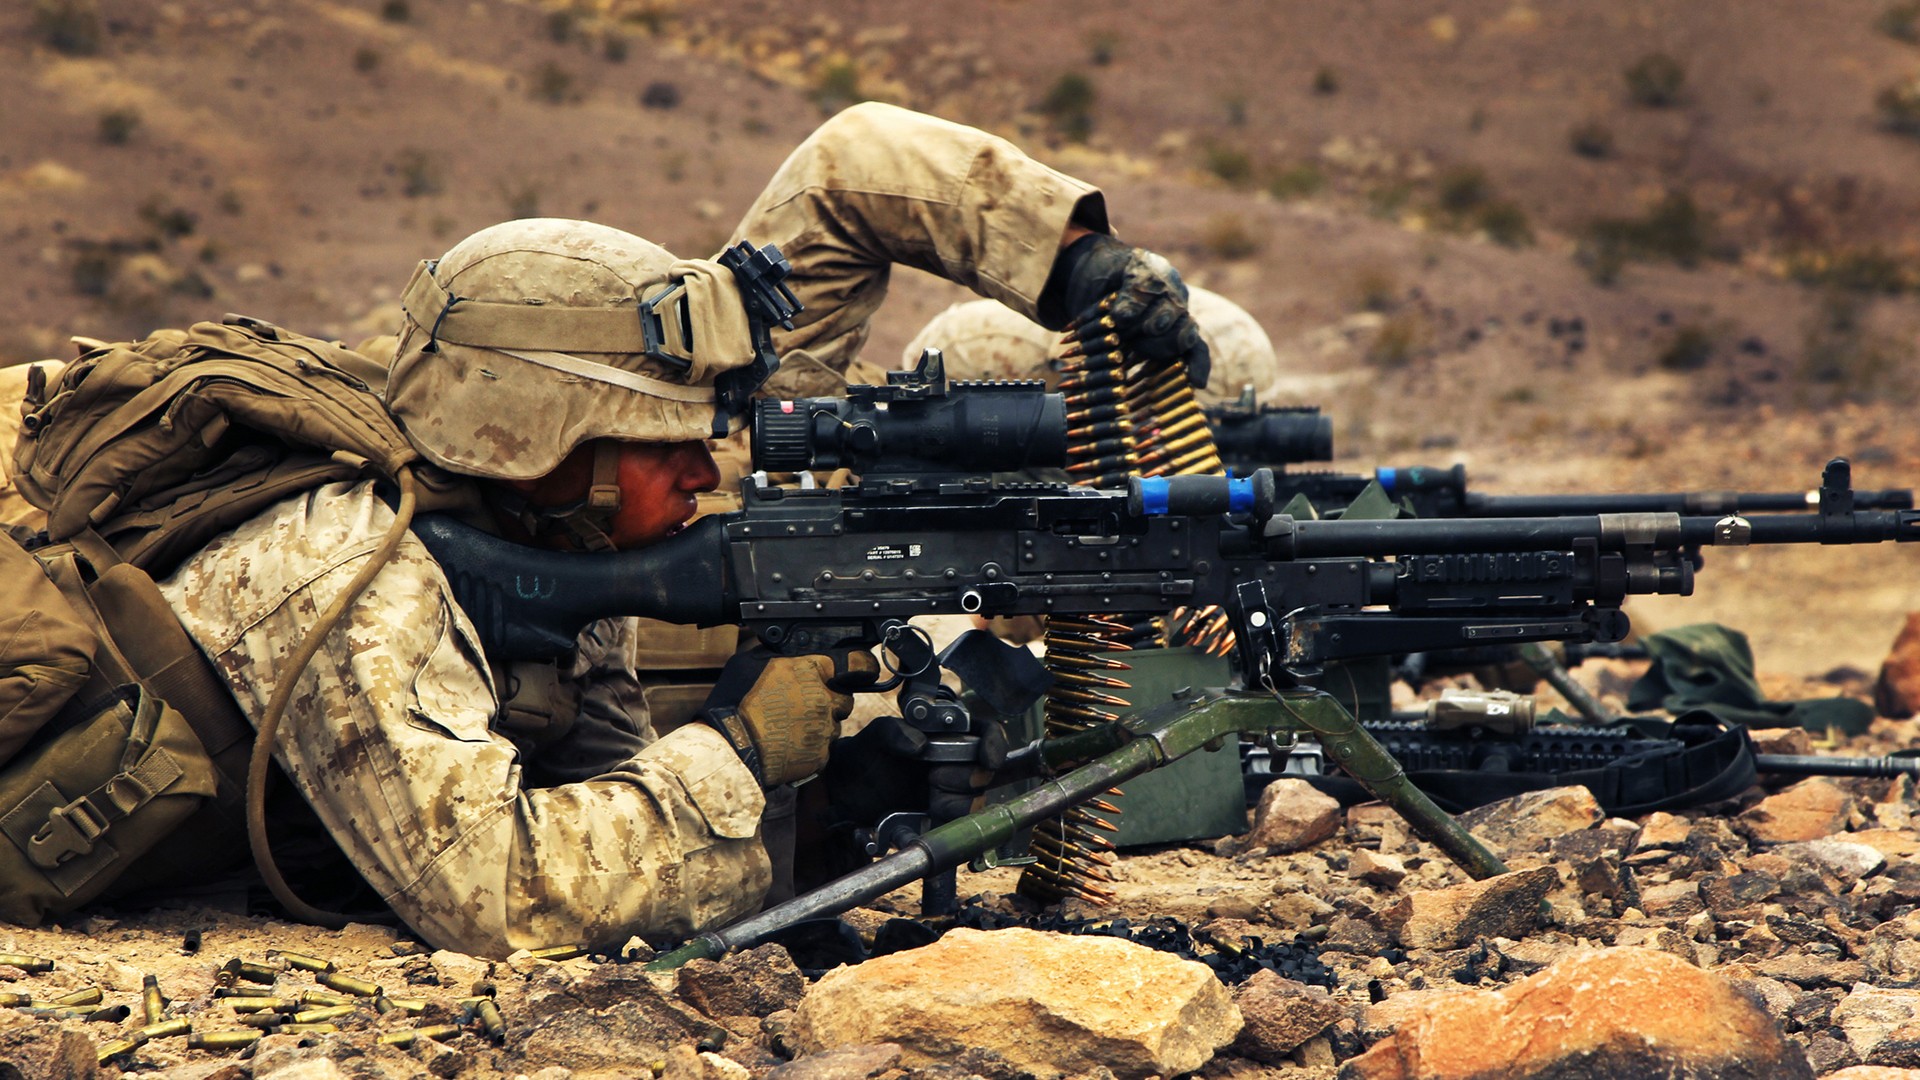 People 1920x1080 war M240 soldier aiming machine gun military weapon men marines